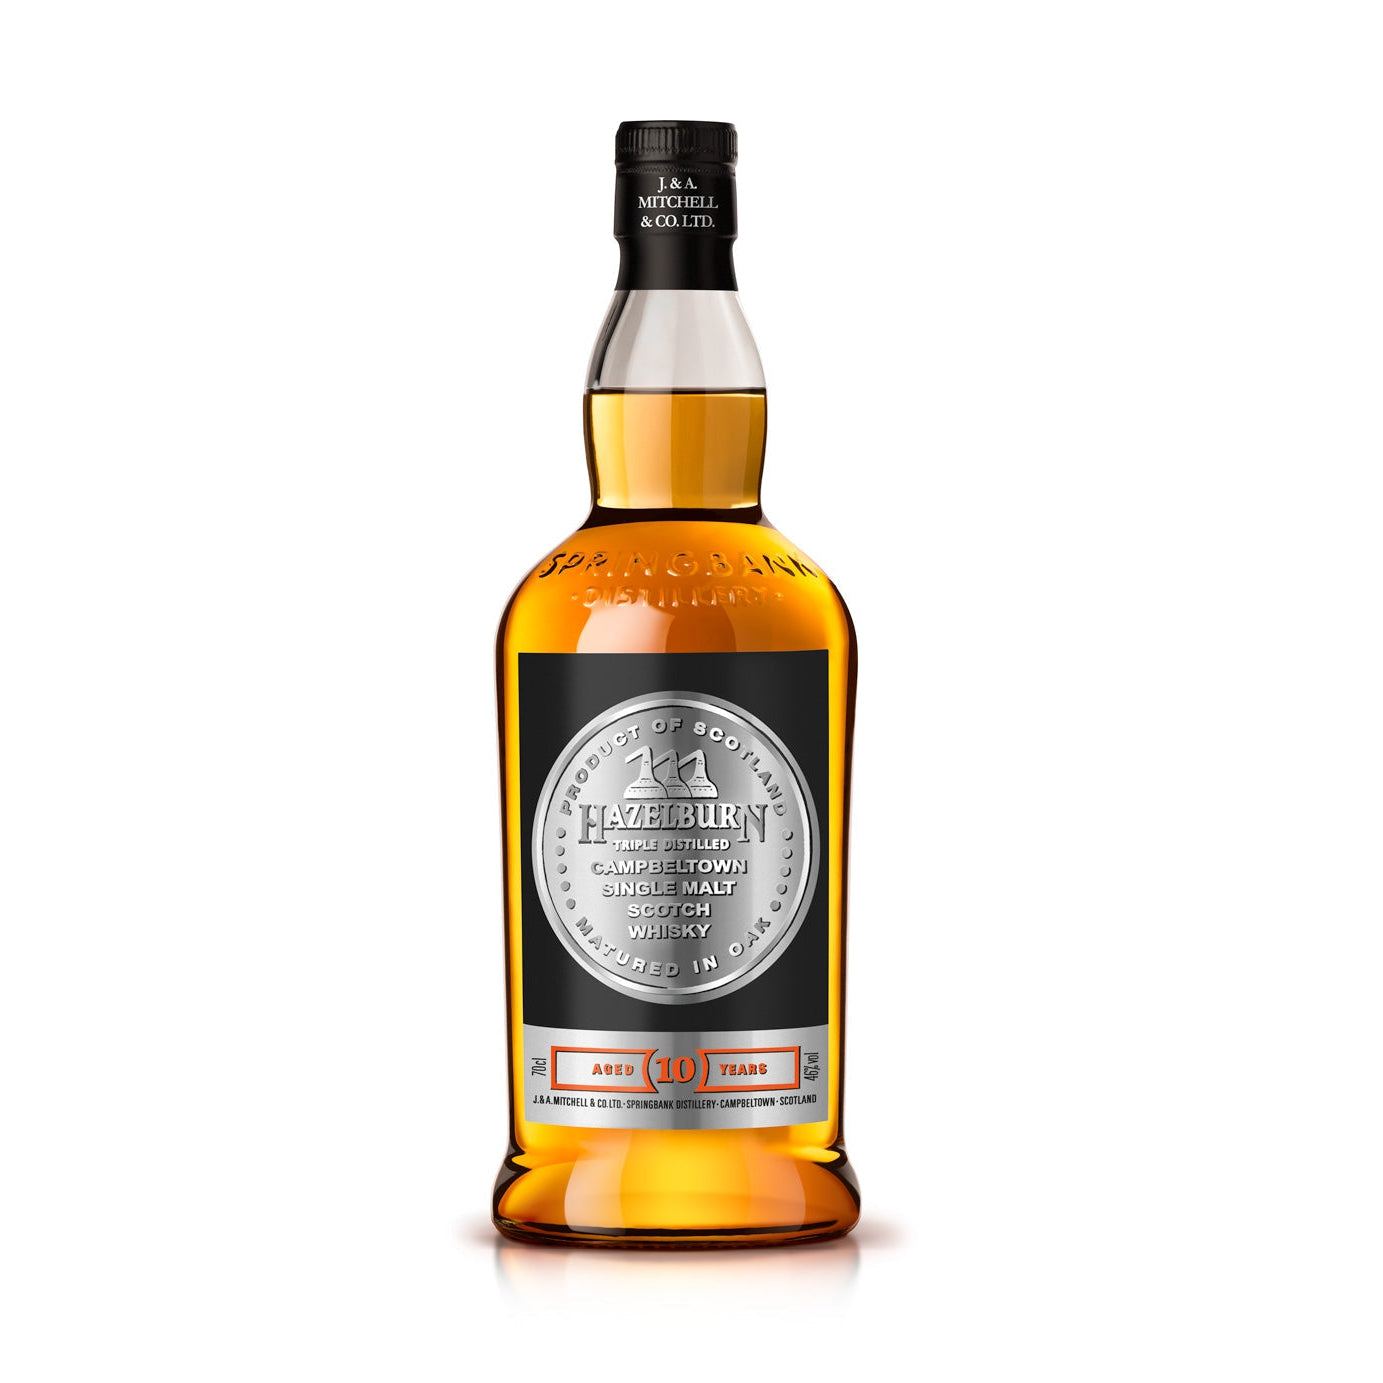 Hazelburn 10 Year Old - Single Malt Scotch Whisky-Single Malt Scotch Whisky-610854000837-Fountainhall Wines